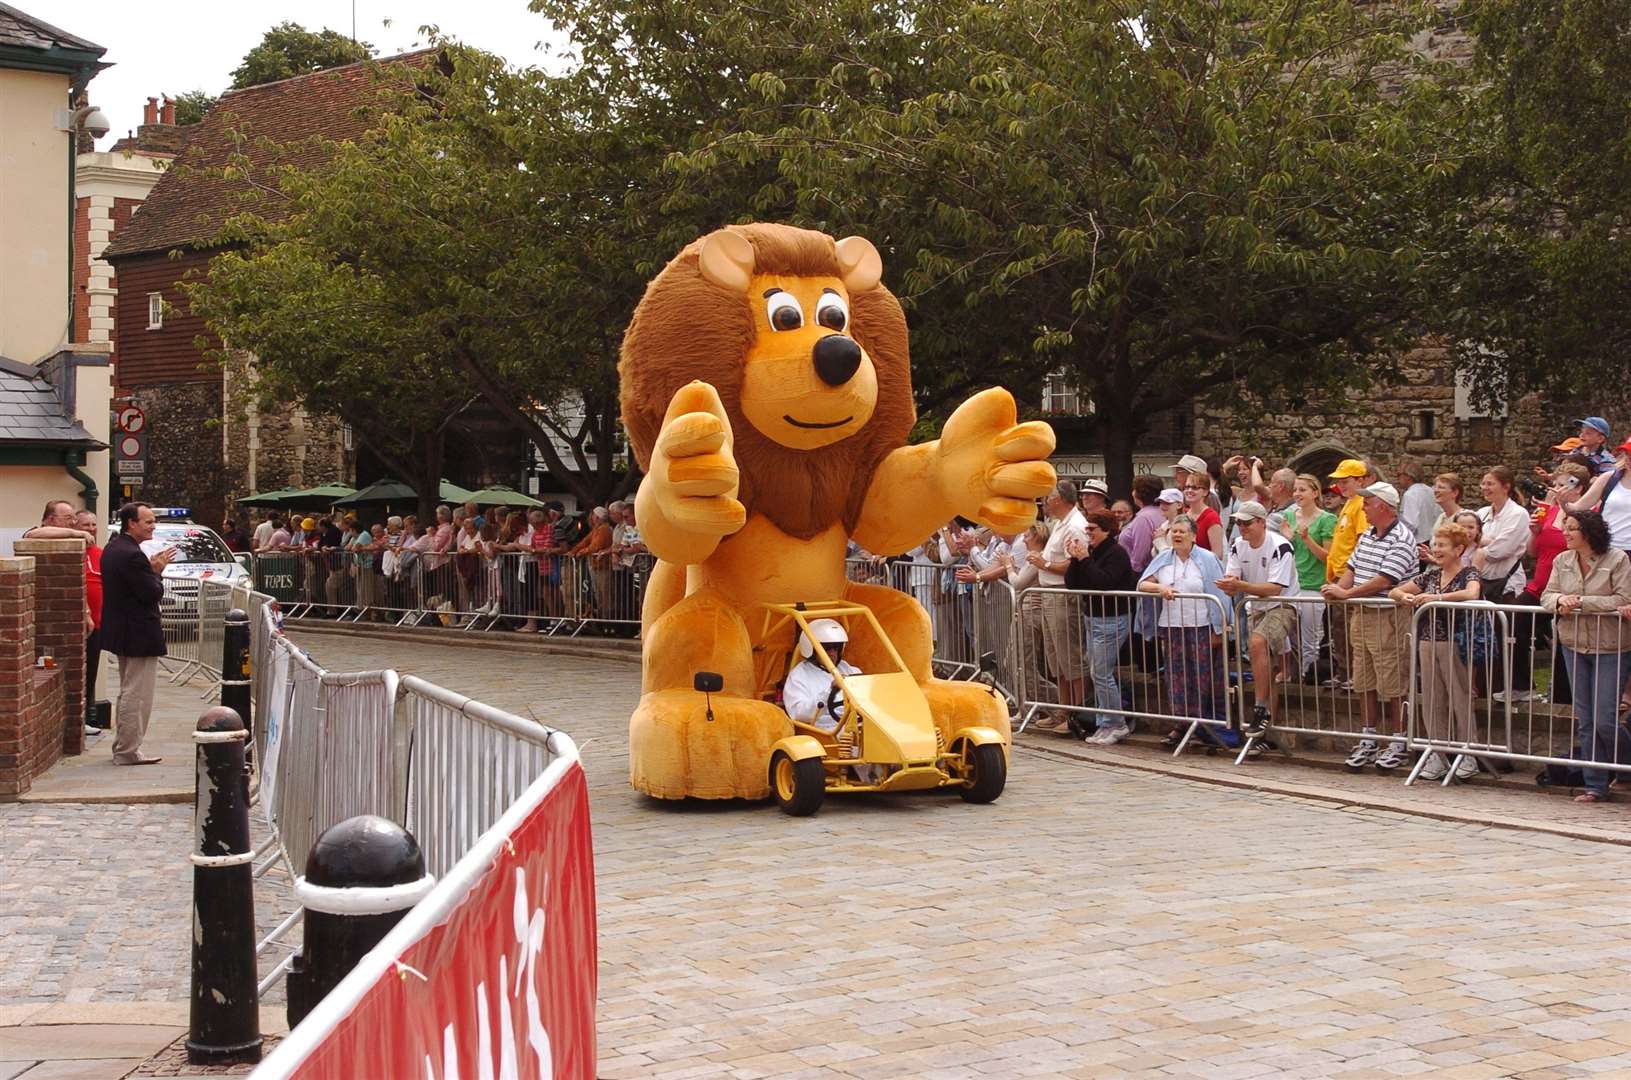 The Tour de France lion mascot makes his way through Rochester. Pic: Jim Rantell